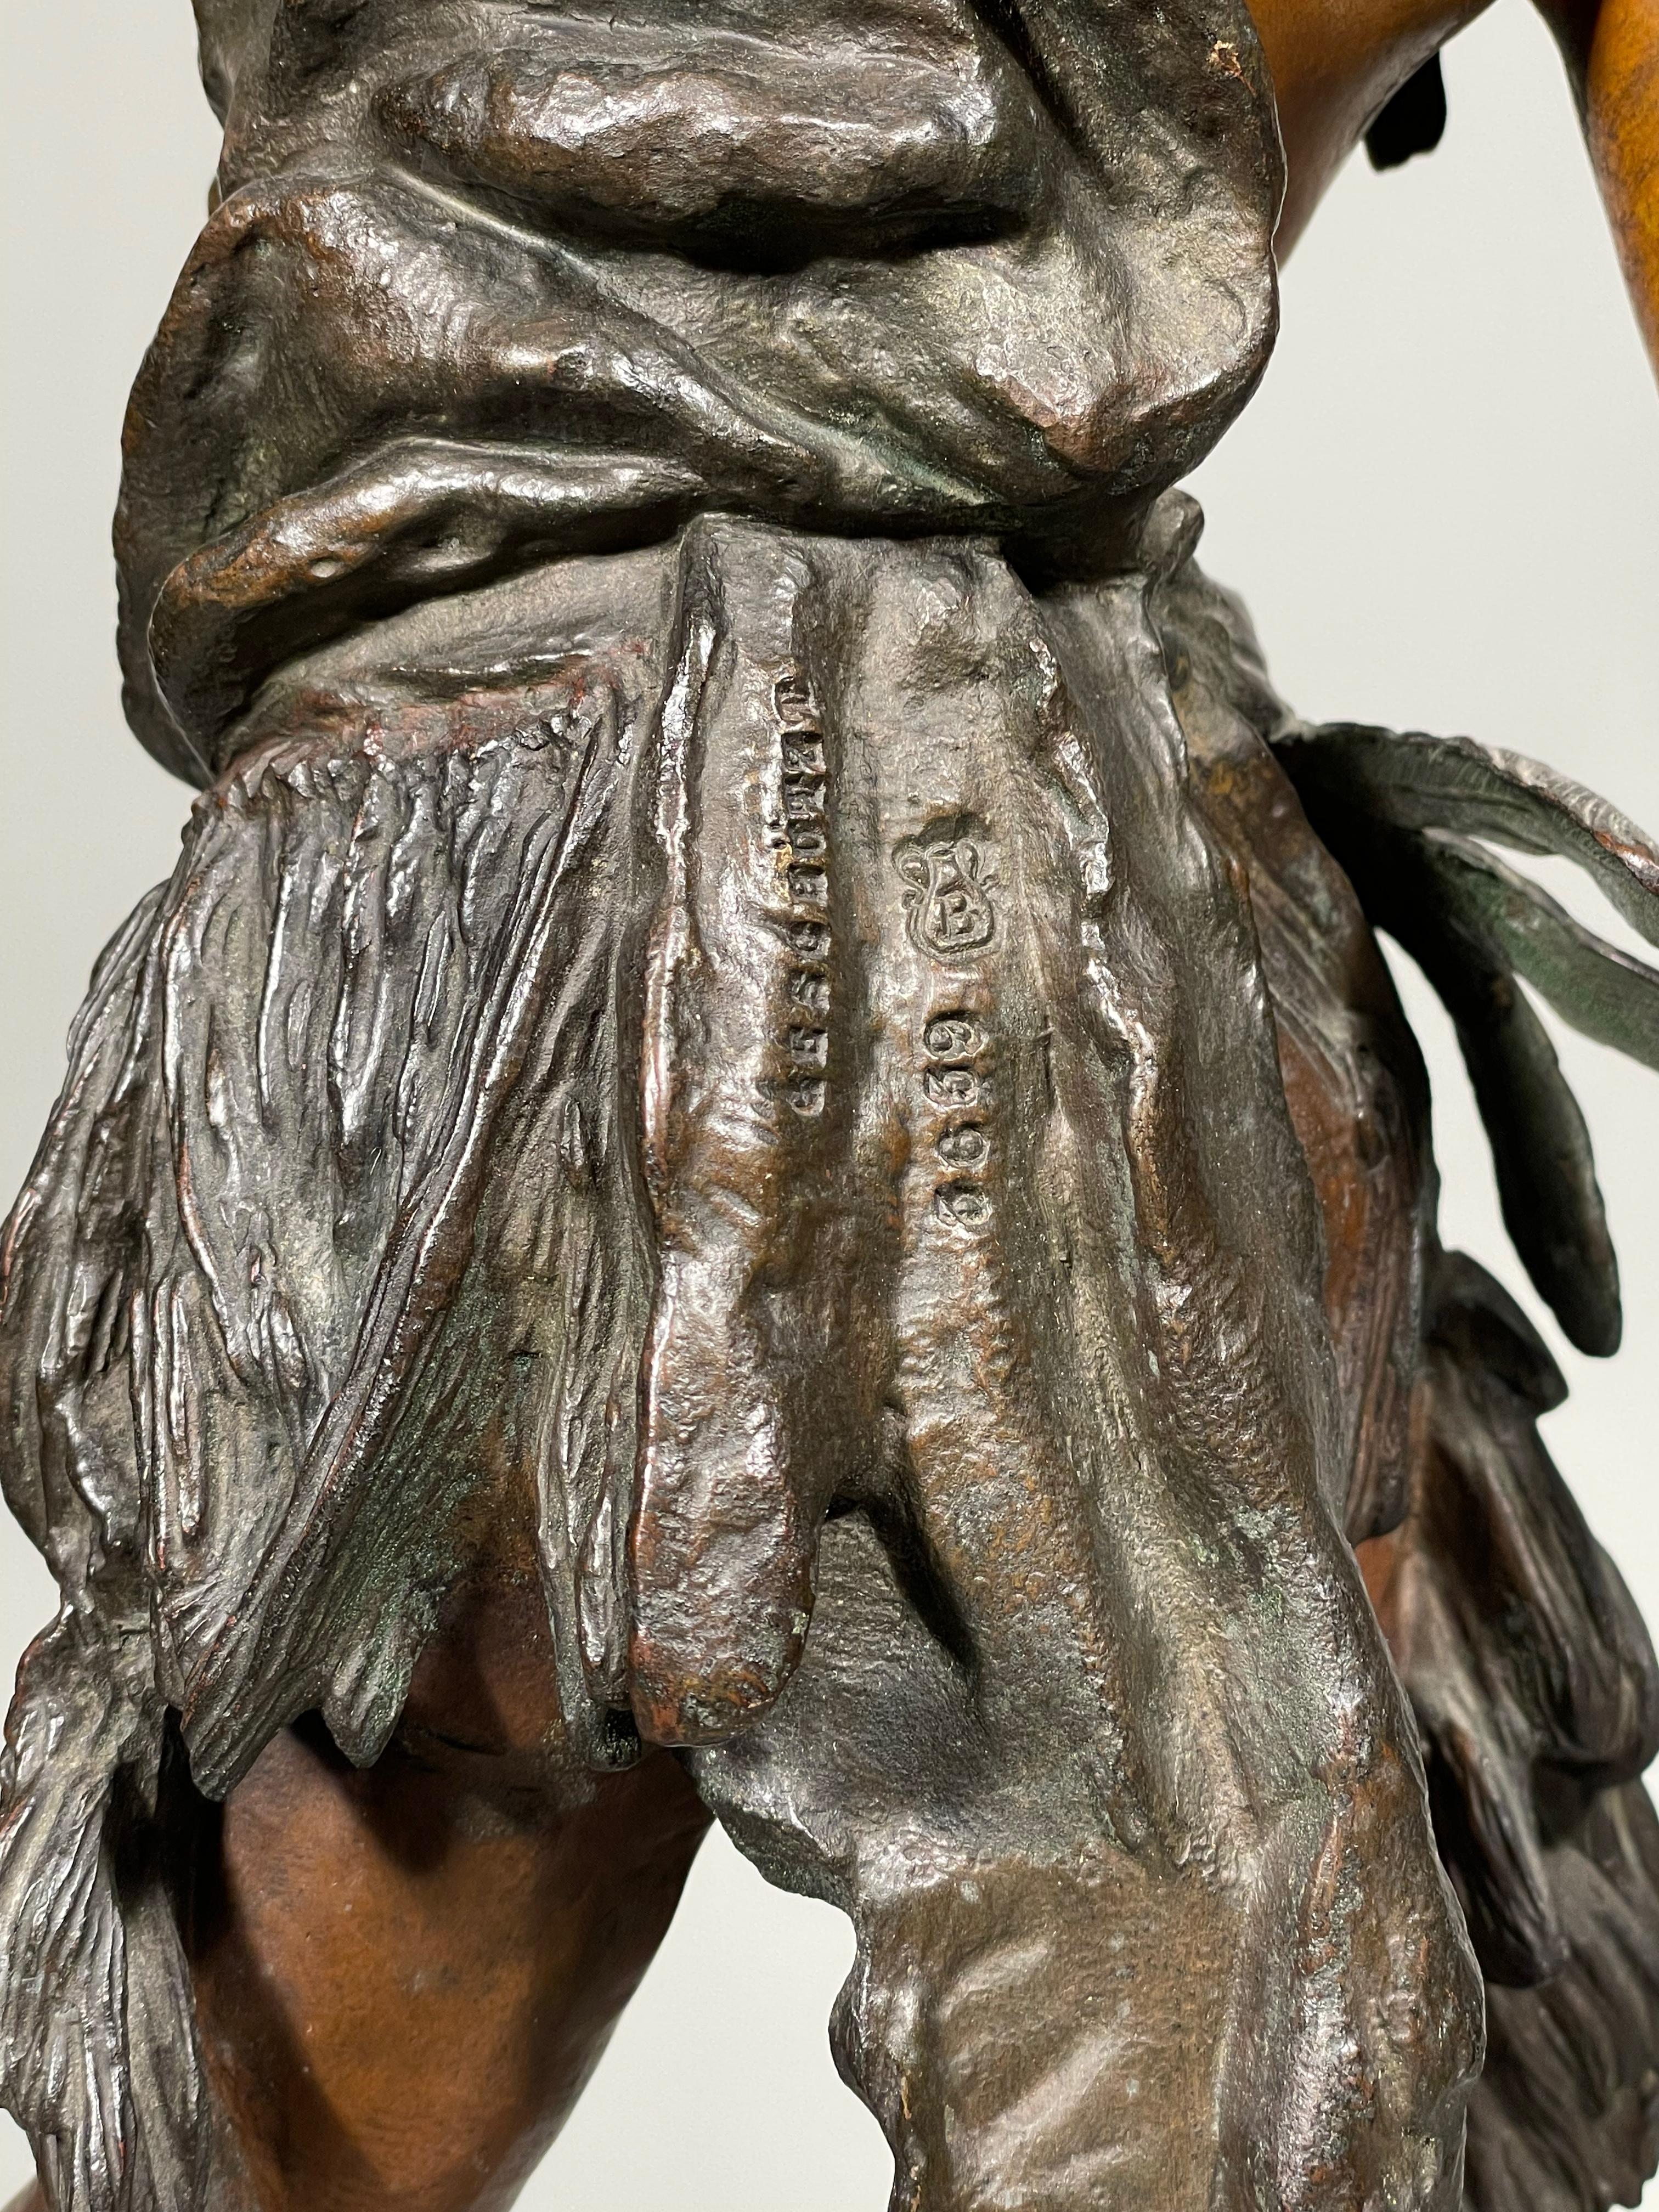 Austrian Native American Indian Warrior Sculpture Attributed to Carl Kauba